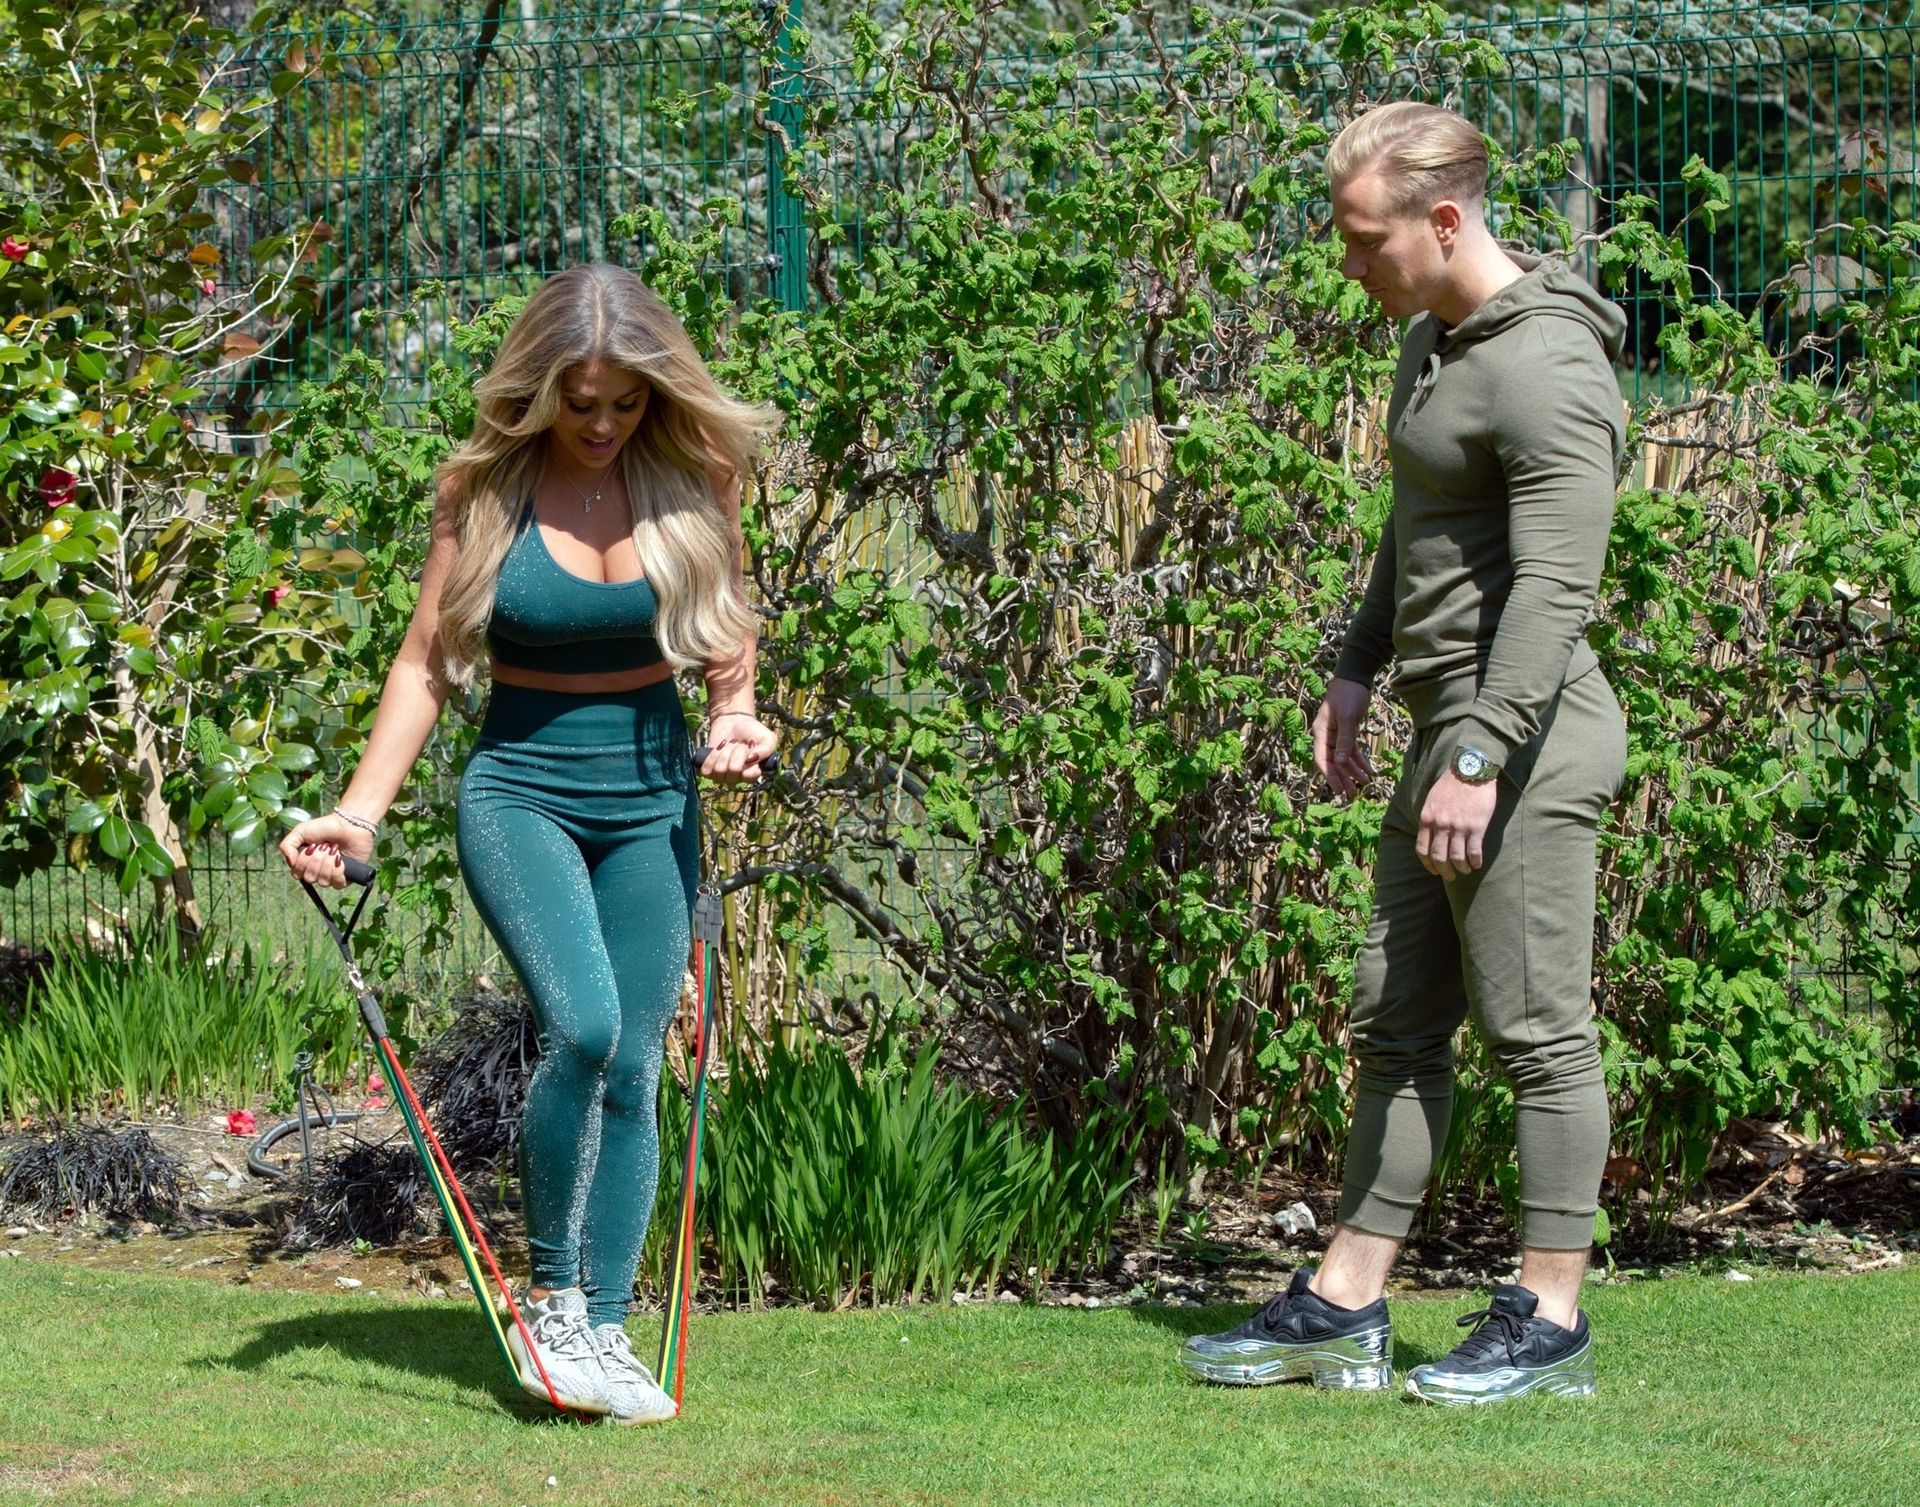 Bianca Gascoigne & Kris Boyson are Seen Working Out in Gravesend (21 Photos)